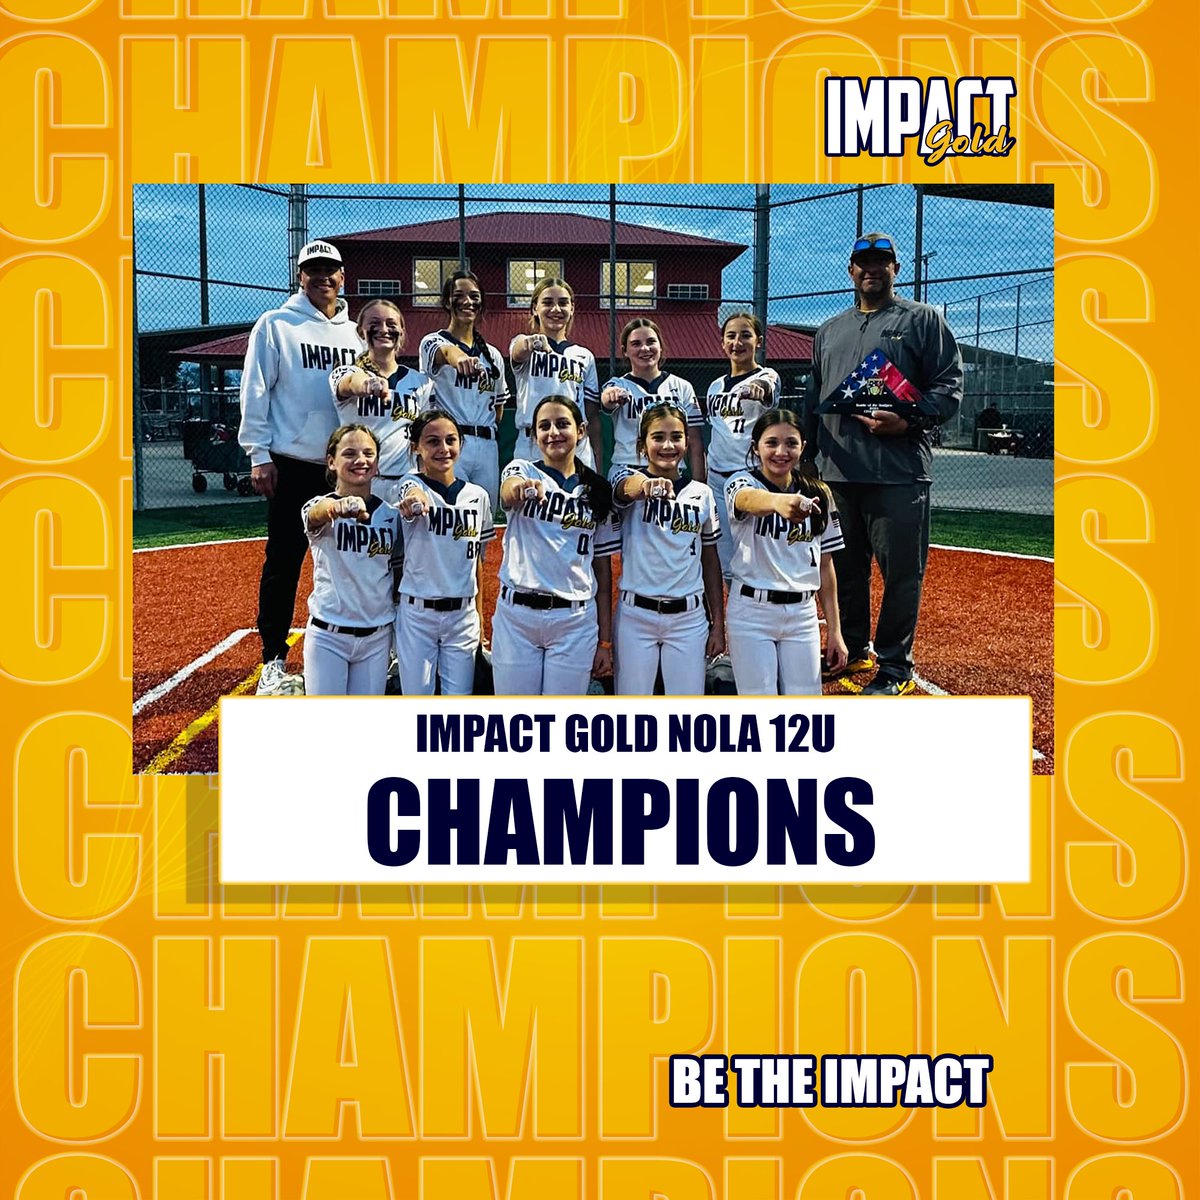 Congratulations to Impact Gold Nola 12U winning the championship in Battle of the Badges!! Great job, ladies! #betheimpact #goldblooded #impactgoldnola12u